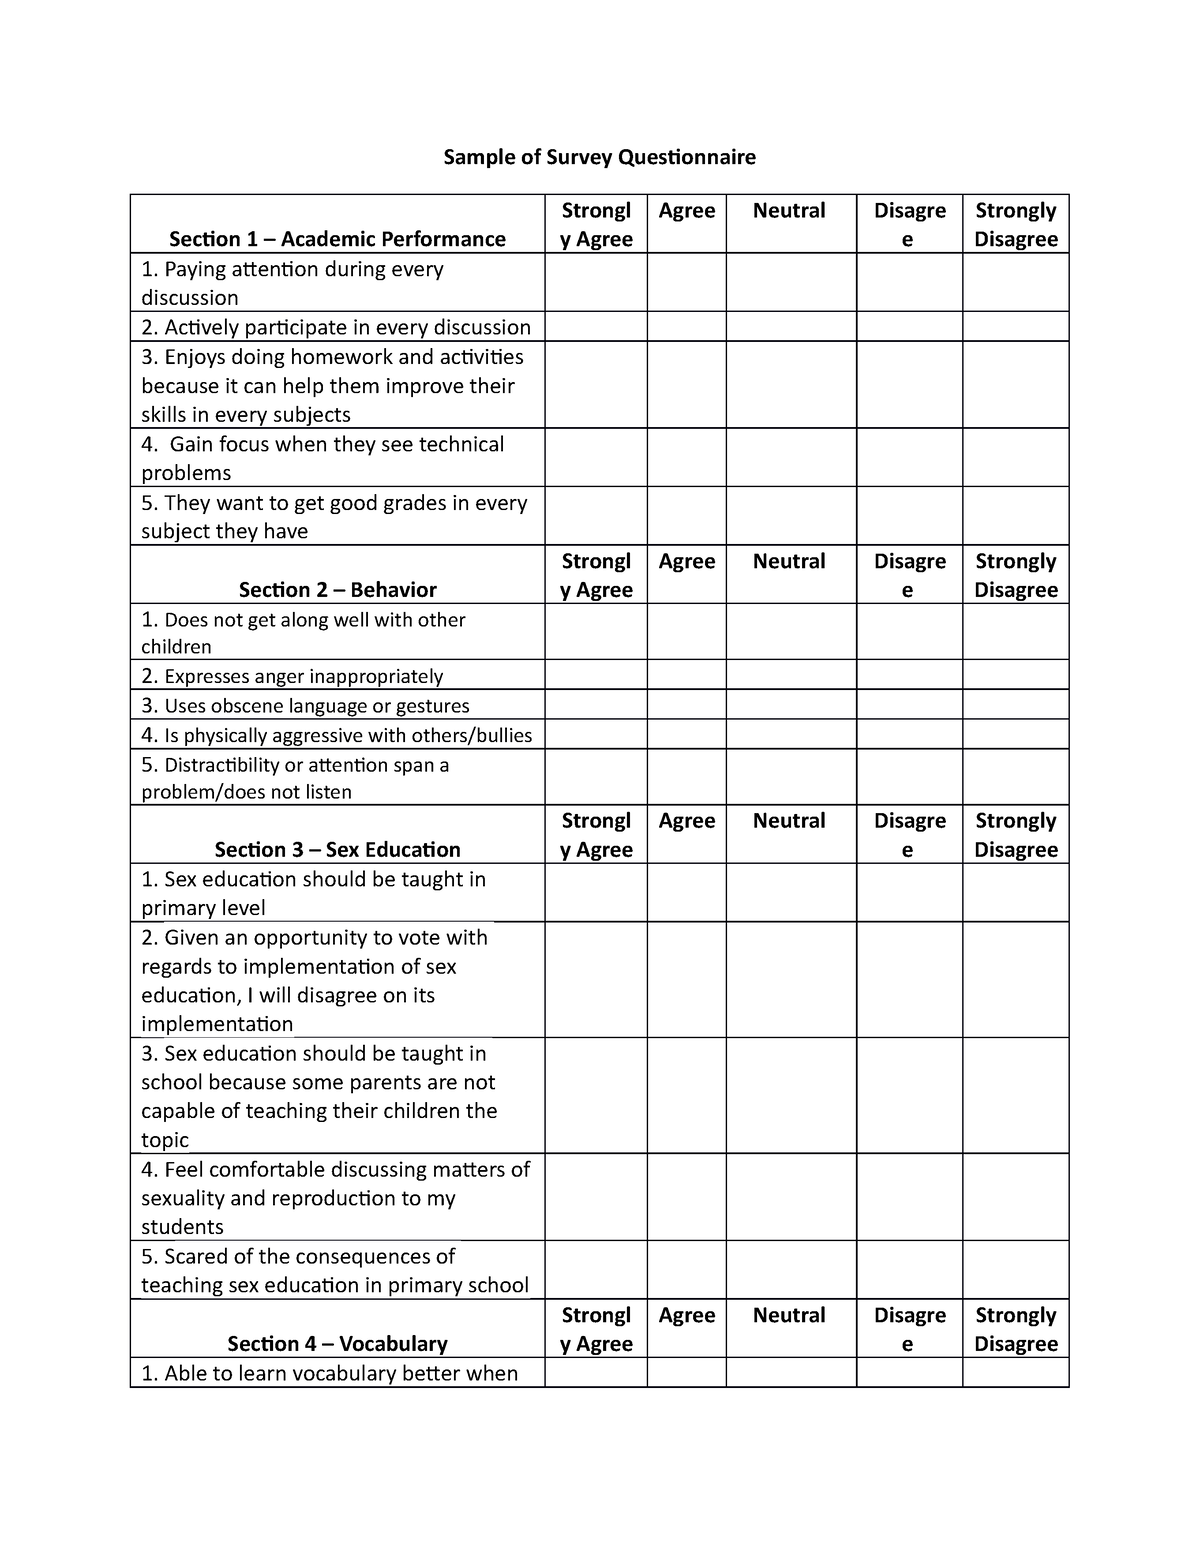 thesis questionnaire about academic performance pdf